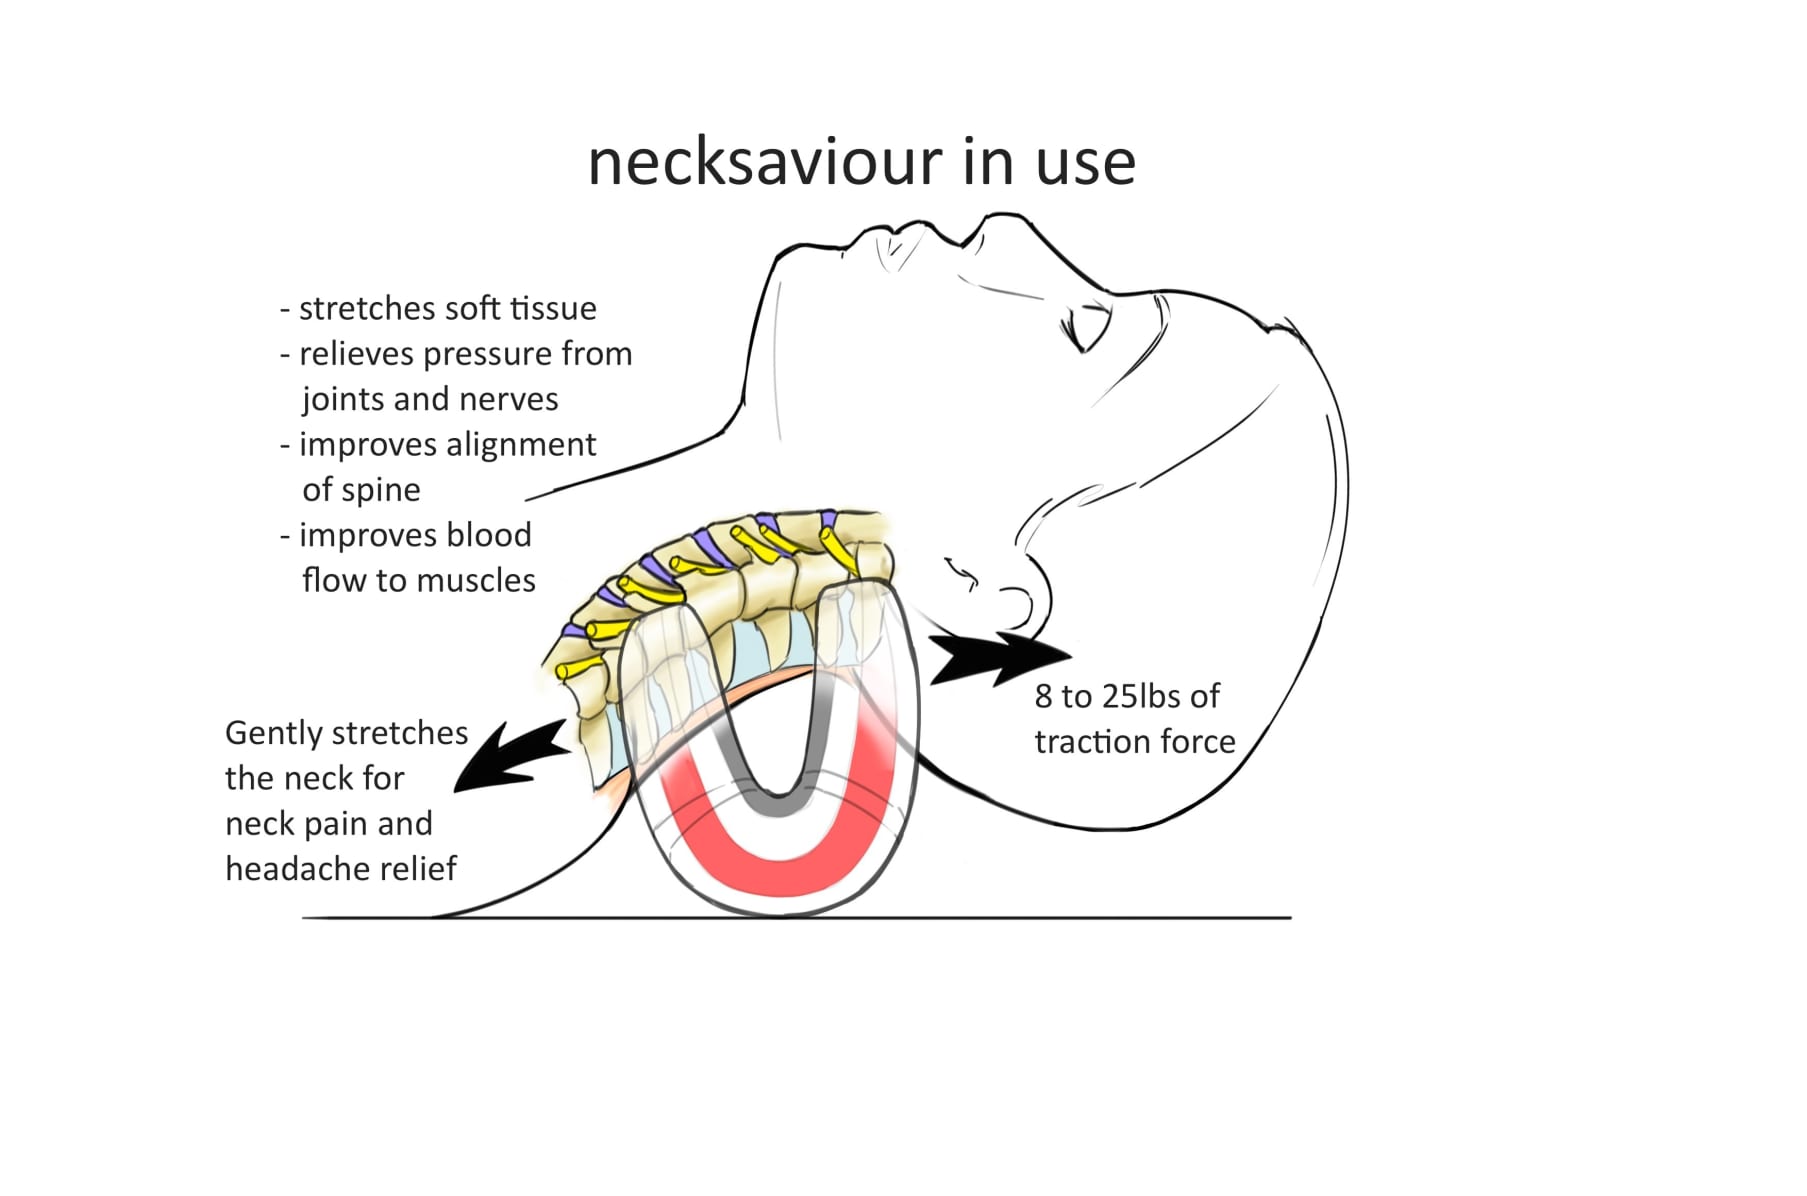 necksaviour Mini - the easy neck stretcher!